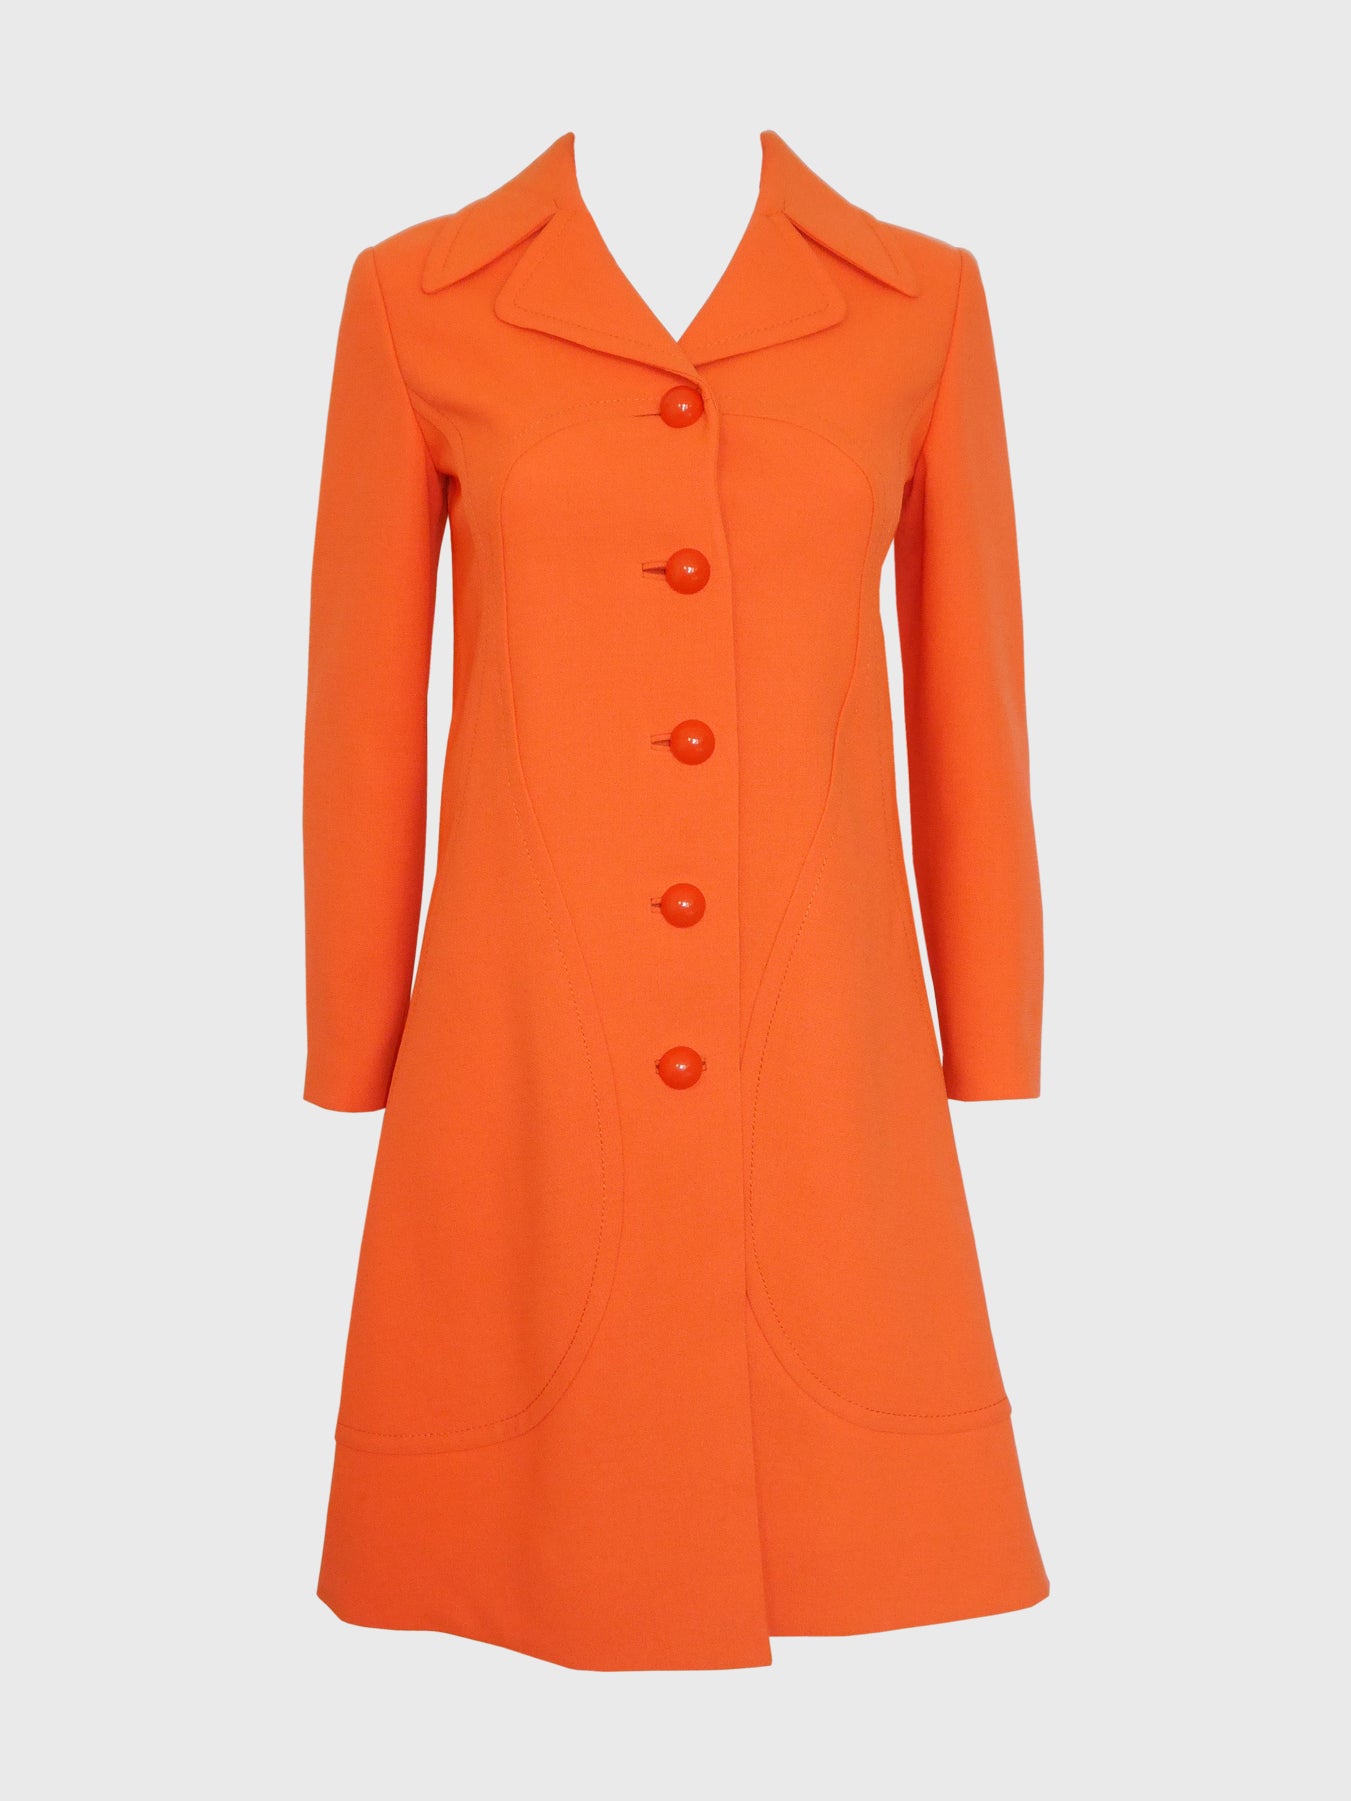 PIERRE CARDIN 1960s Vintage Salmon Orange Mod Coat